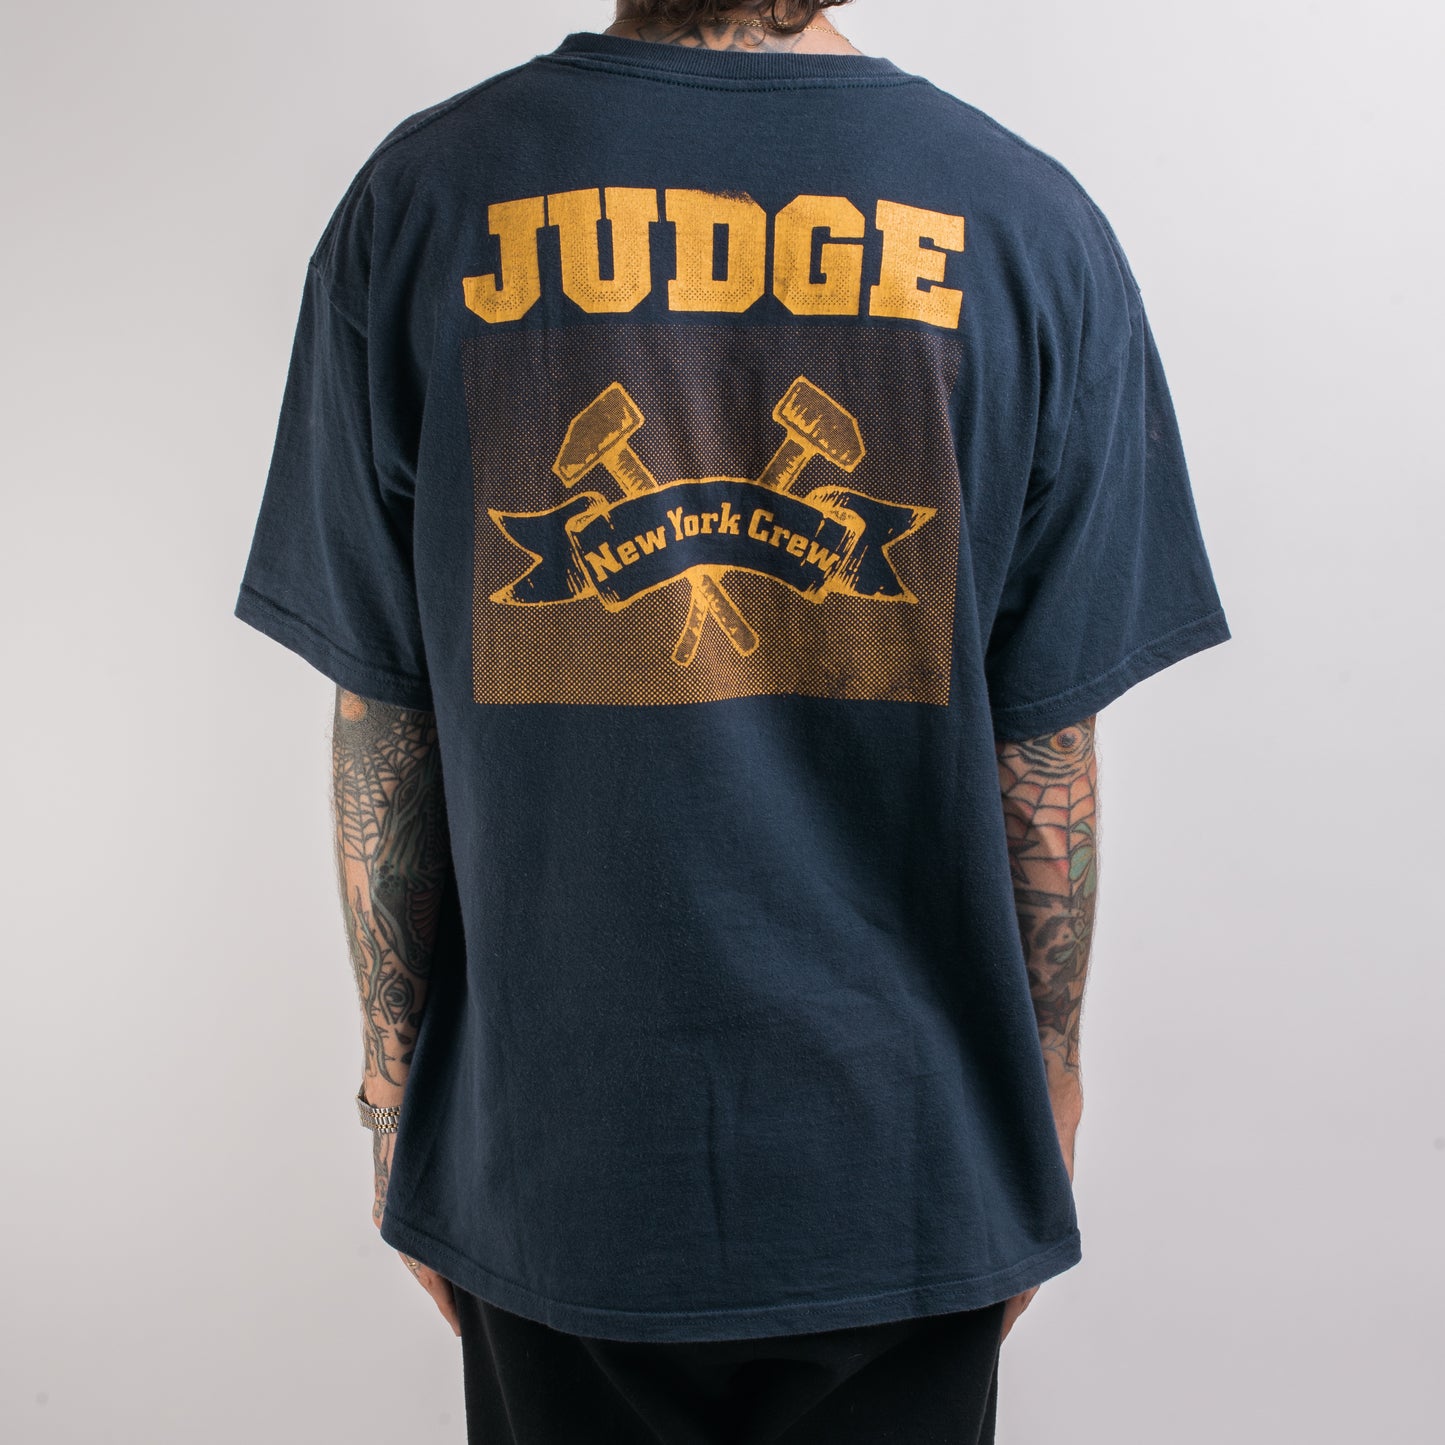 Vintage Judge New York Crew T-Shirt